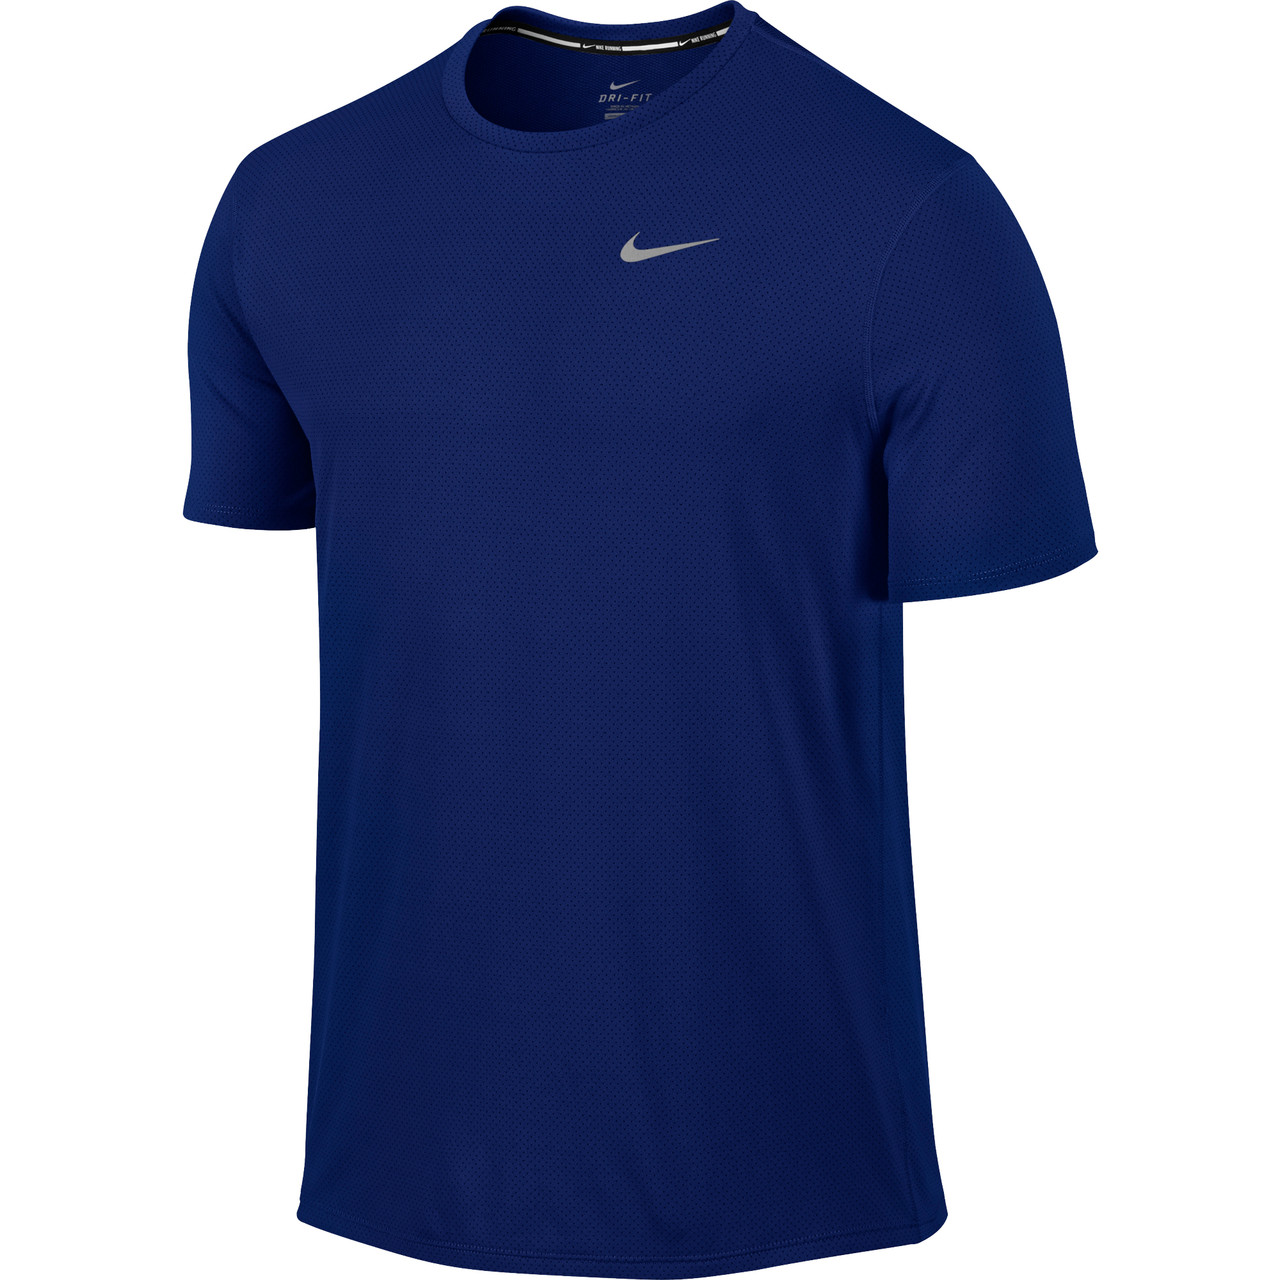 Nike Dri-Fit Contour Short Sleeve - Men's